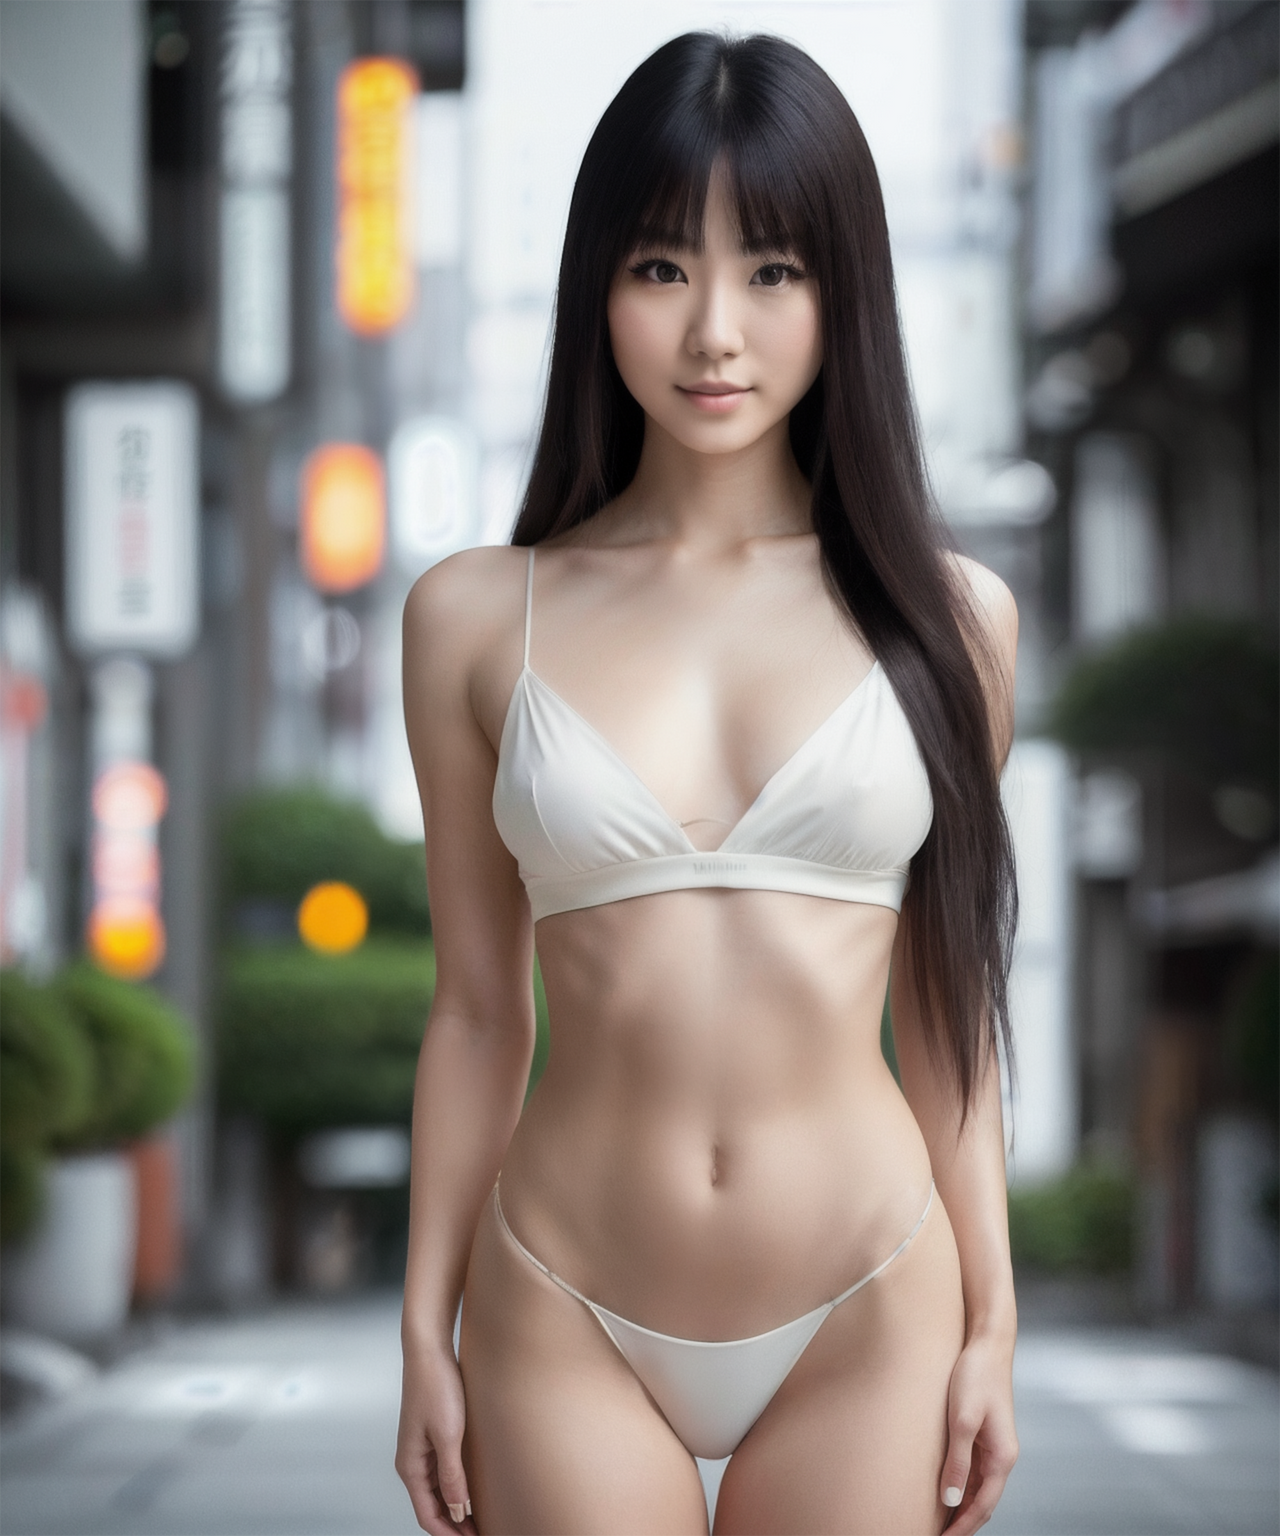 Girl-sexy-lingerie-9 by EastPunkPixel on DeviantArt